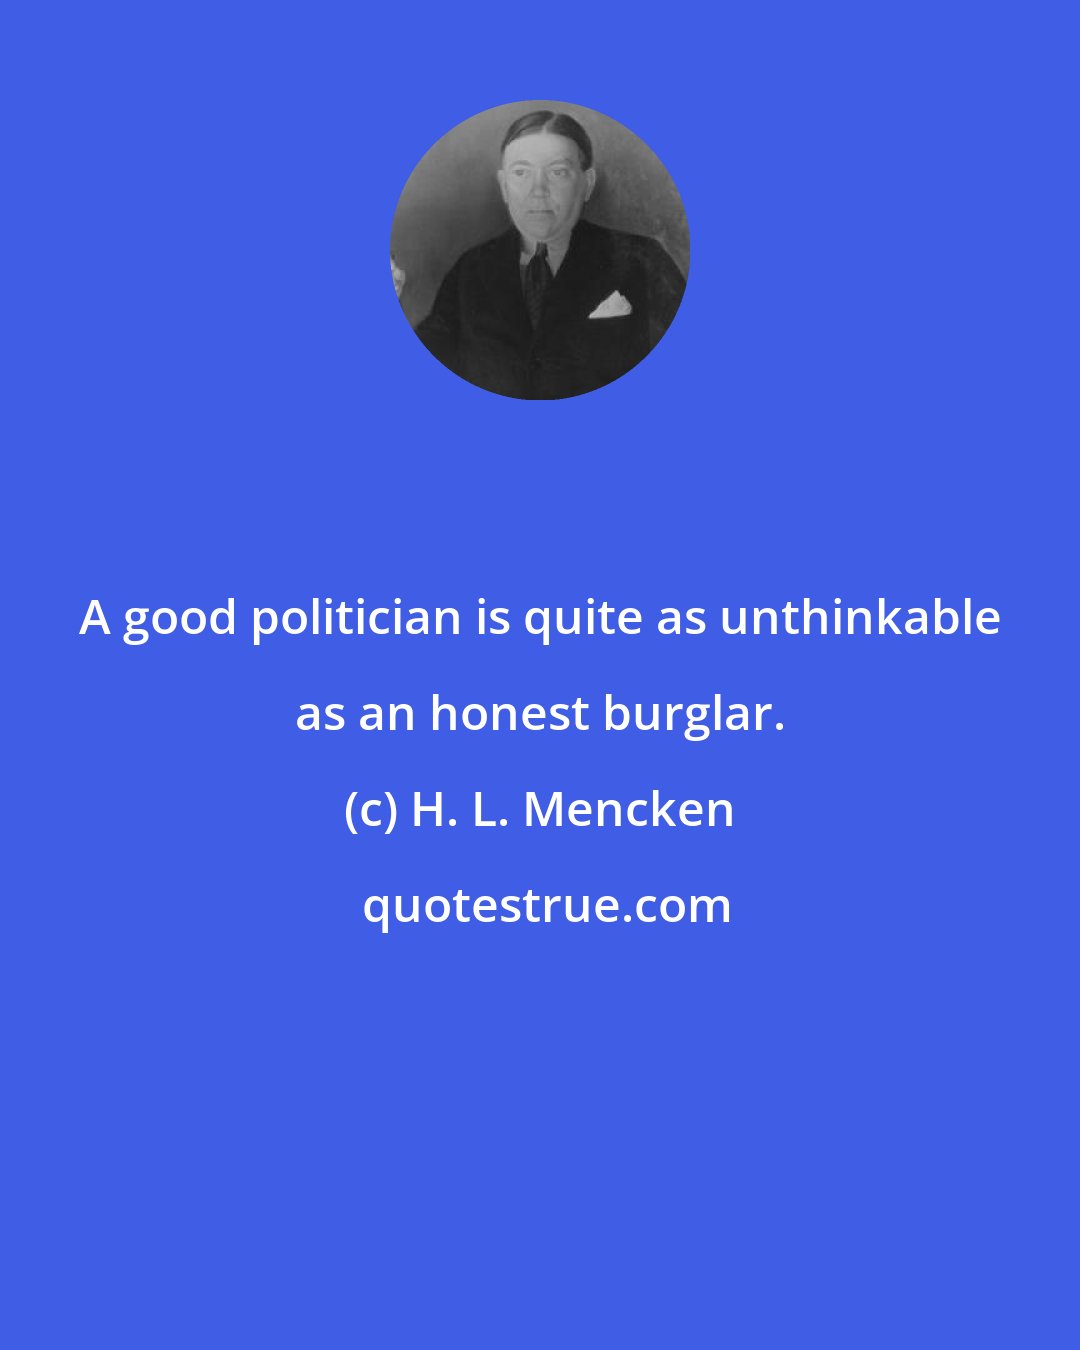 H. L. Mencken: A good politician is quite as unthinkable as an honest burglar.